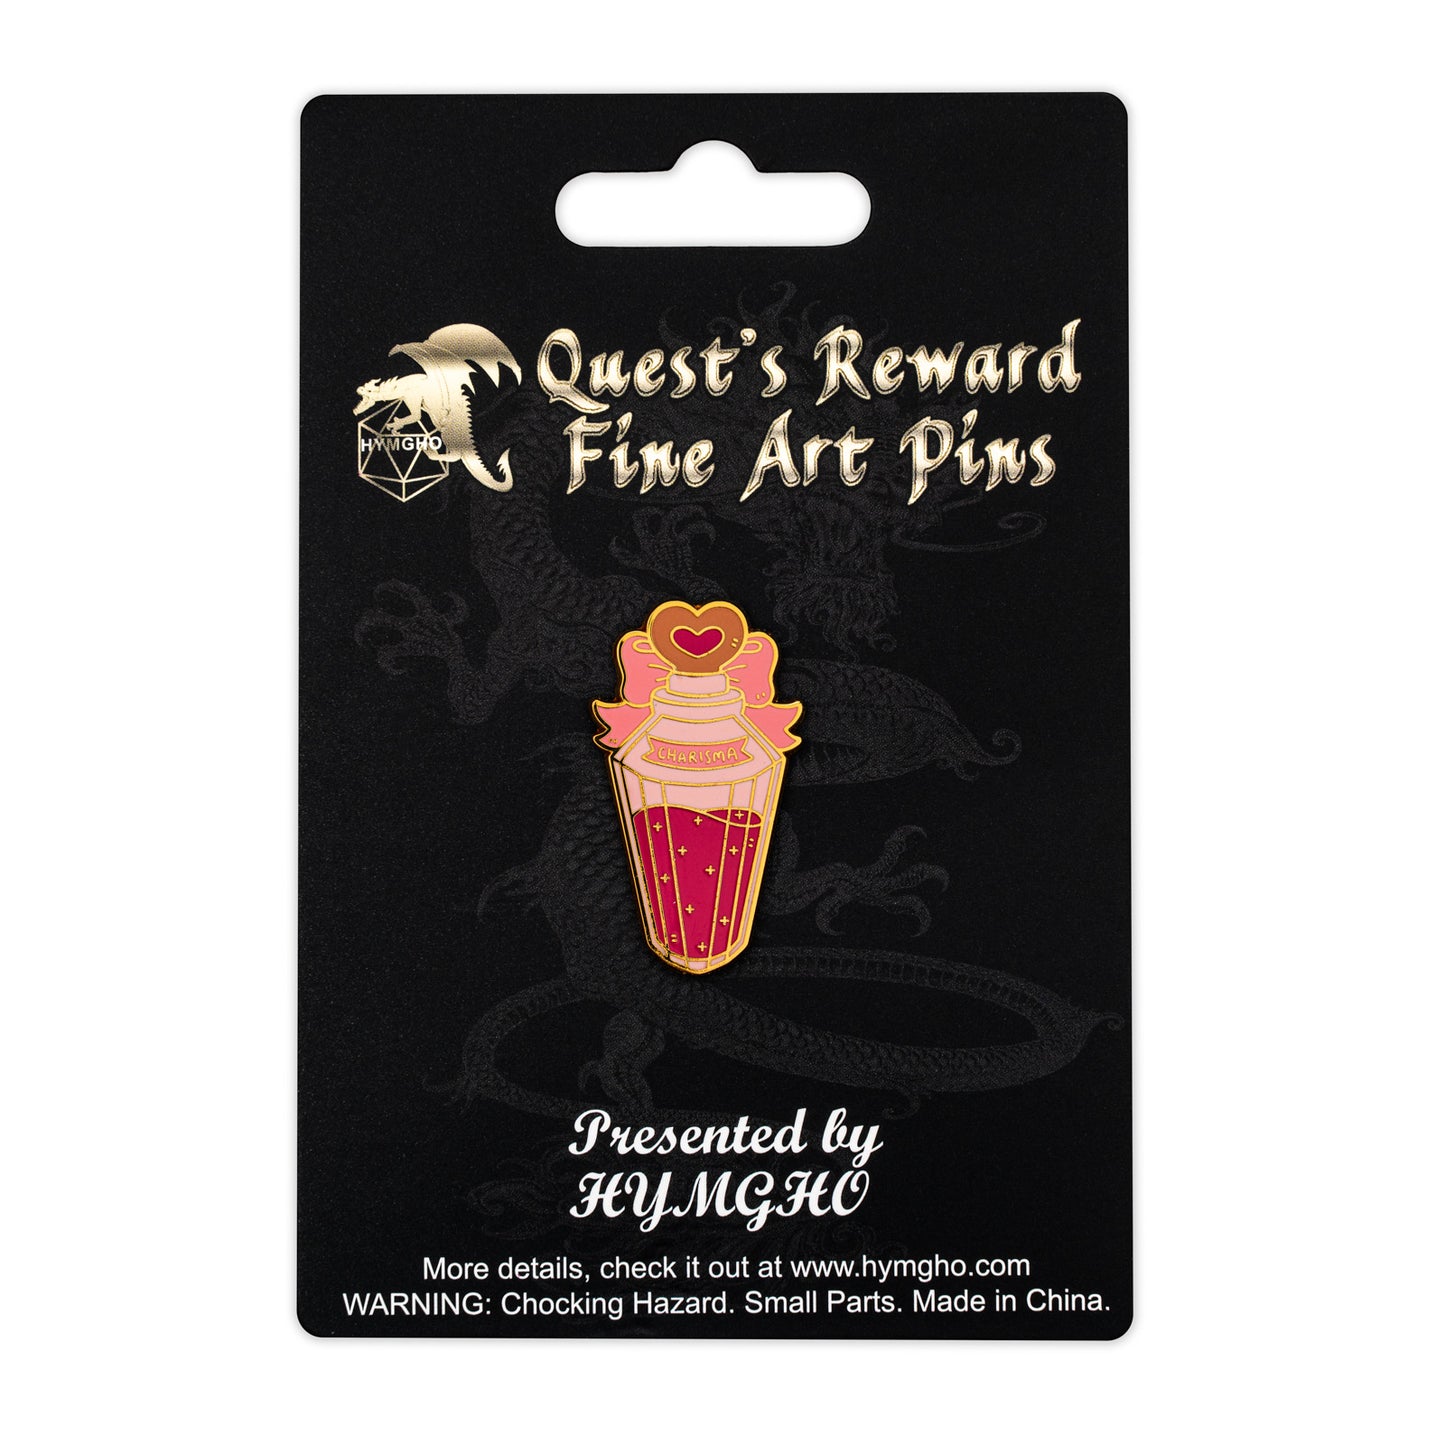 Quest's Reward Fine Art Pins: CHARISMA